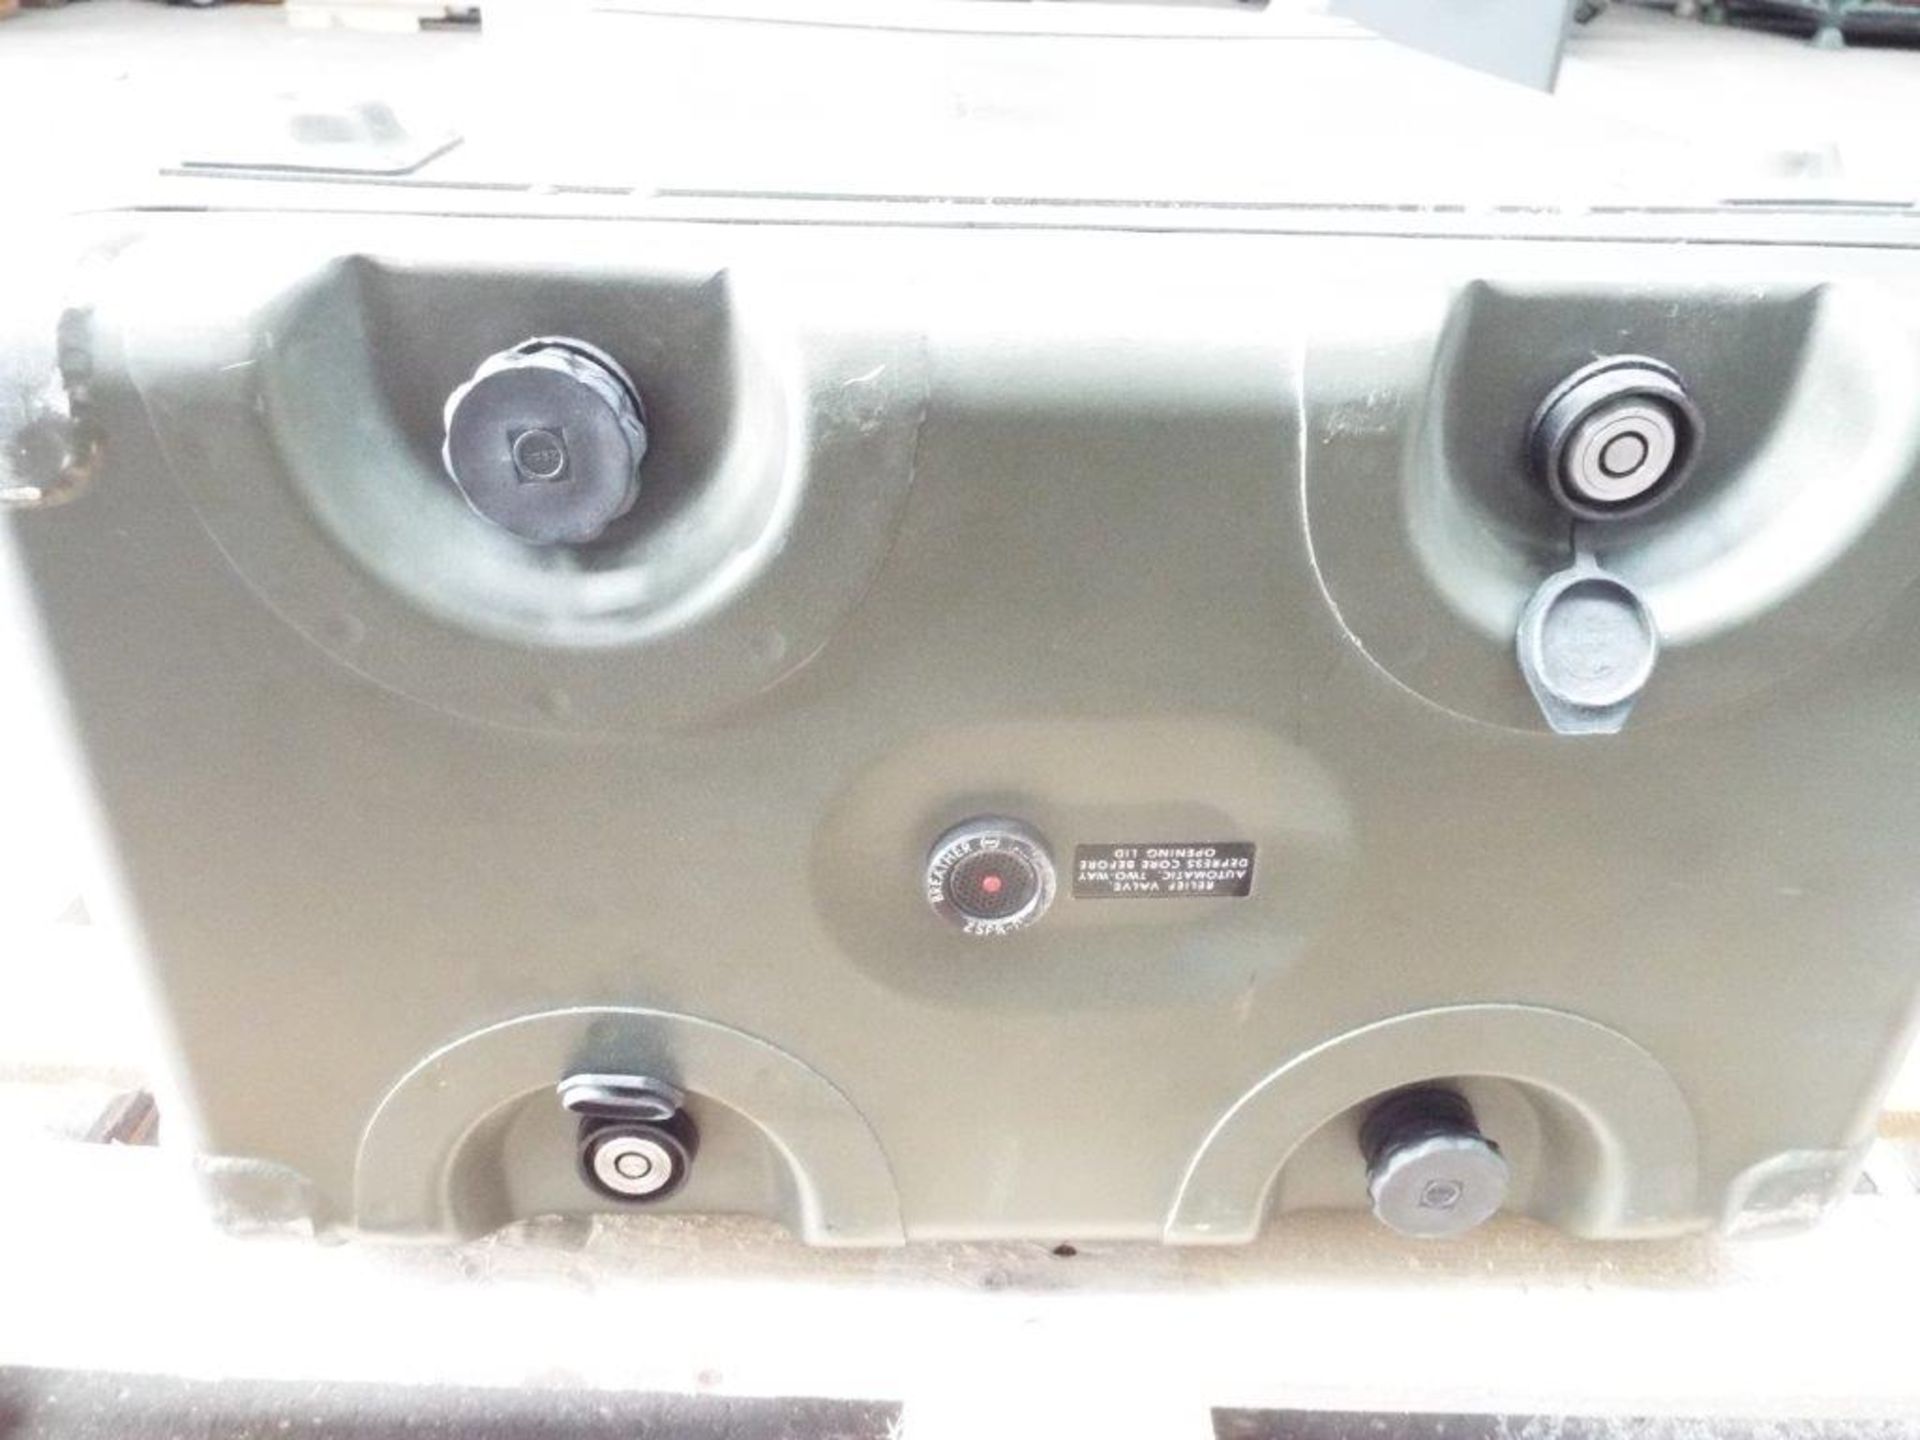 Heavy Duty Zero Double Entry Aluminium Transit Case with Anti-Vibration Cradle - Image 4 of 7